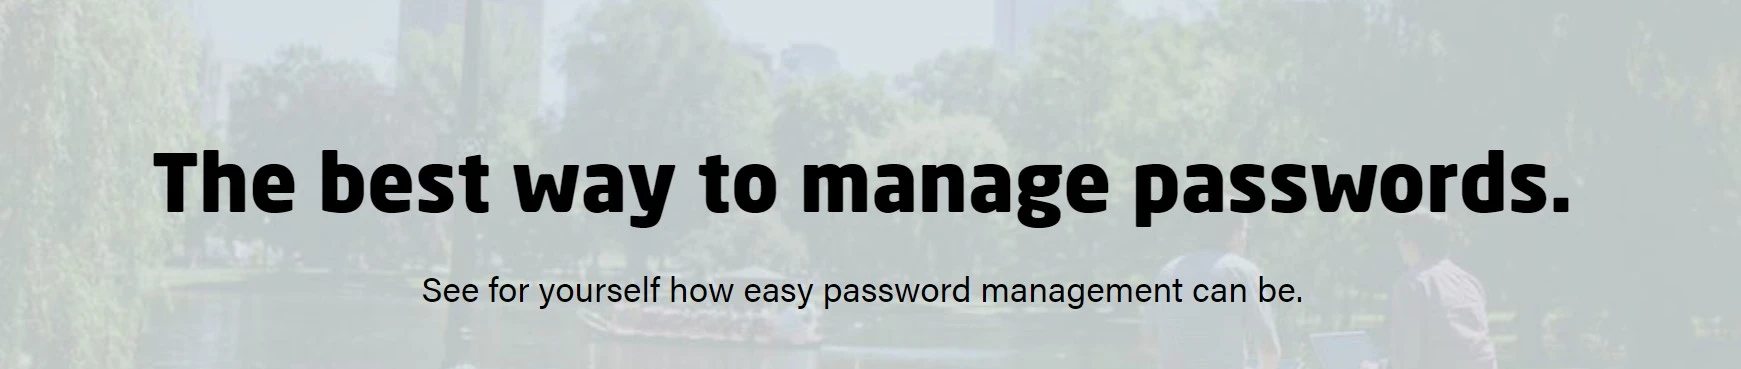 Lastpass makes password management easy 